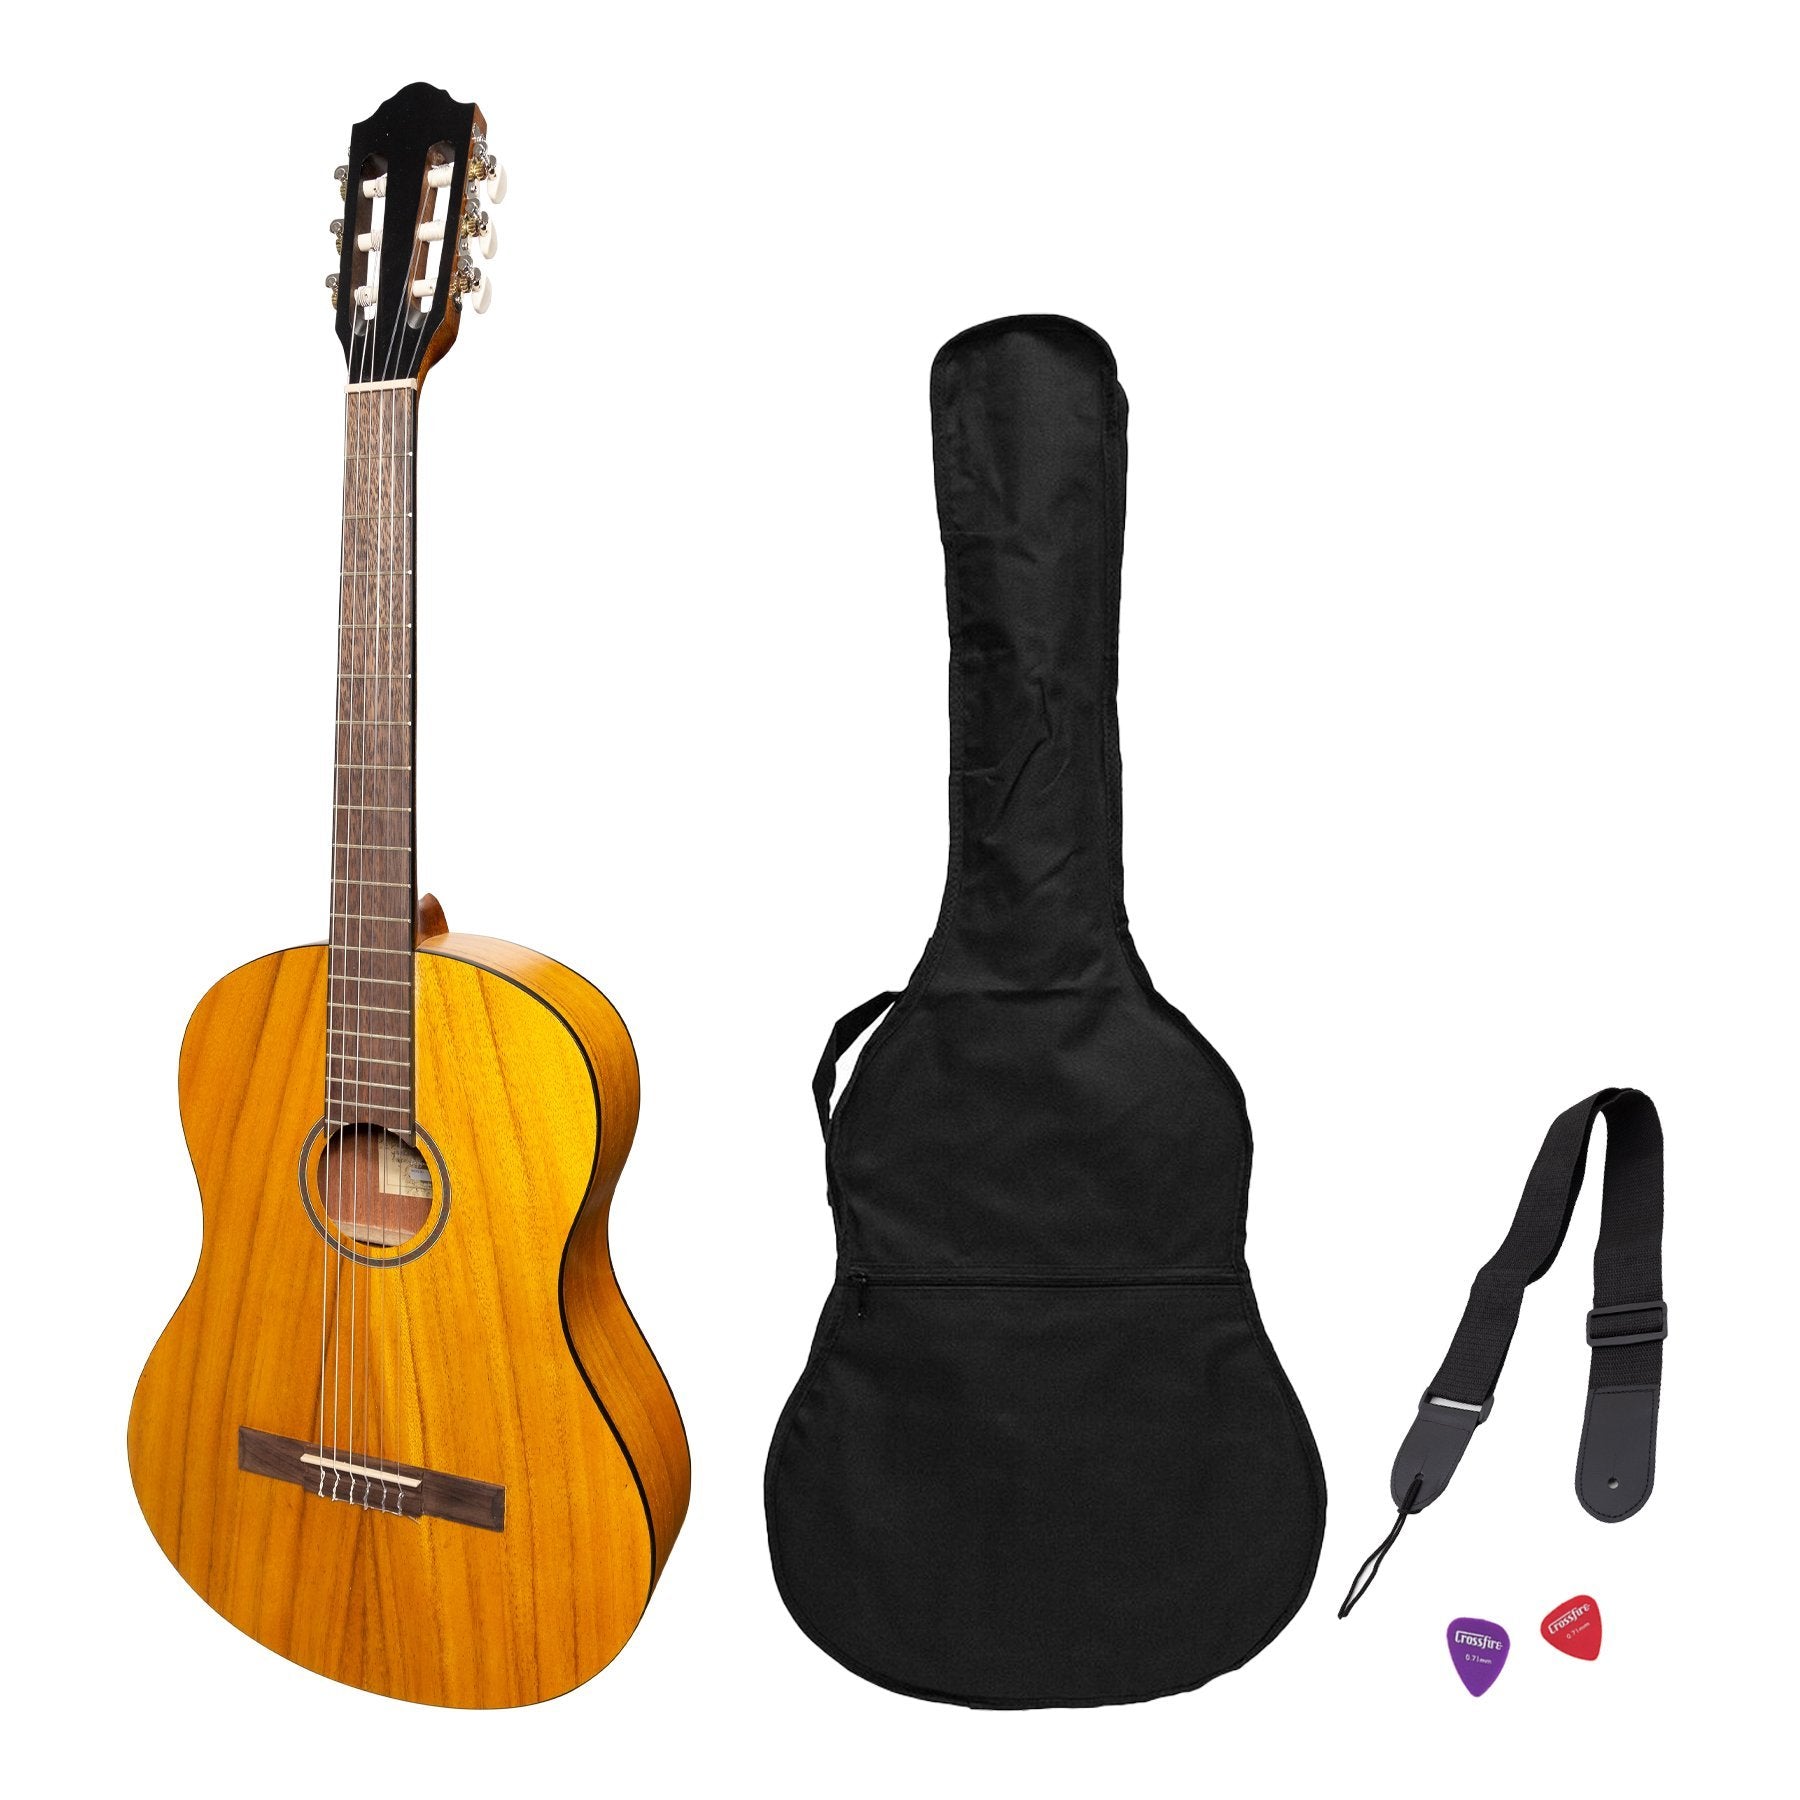 Martinez 'Slim Jim' Full Size Student Classical Guitar Pack with Built In Tuner (Koa)-MP-SJ44T-KOA